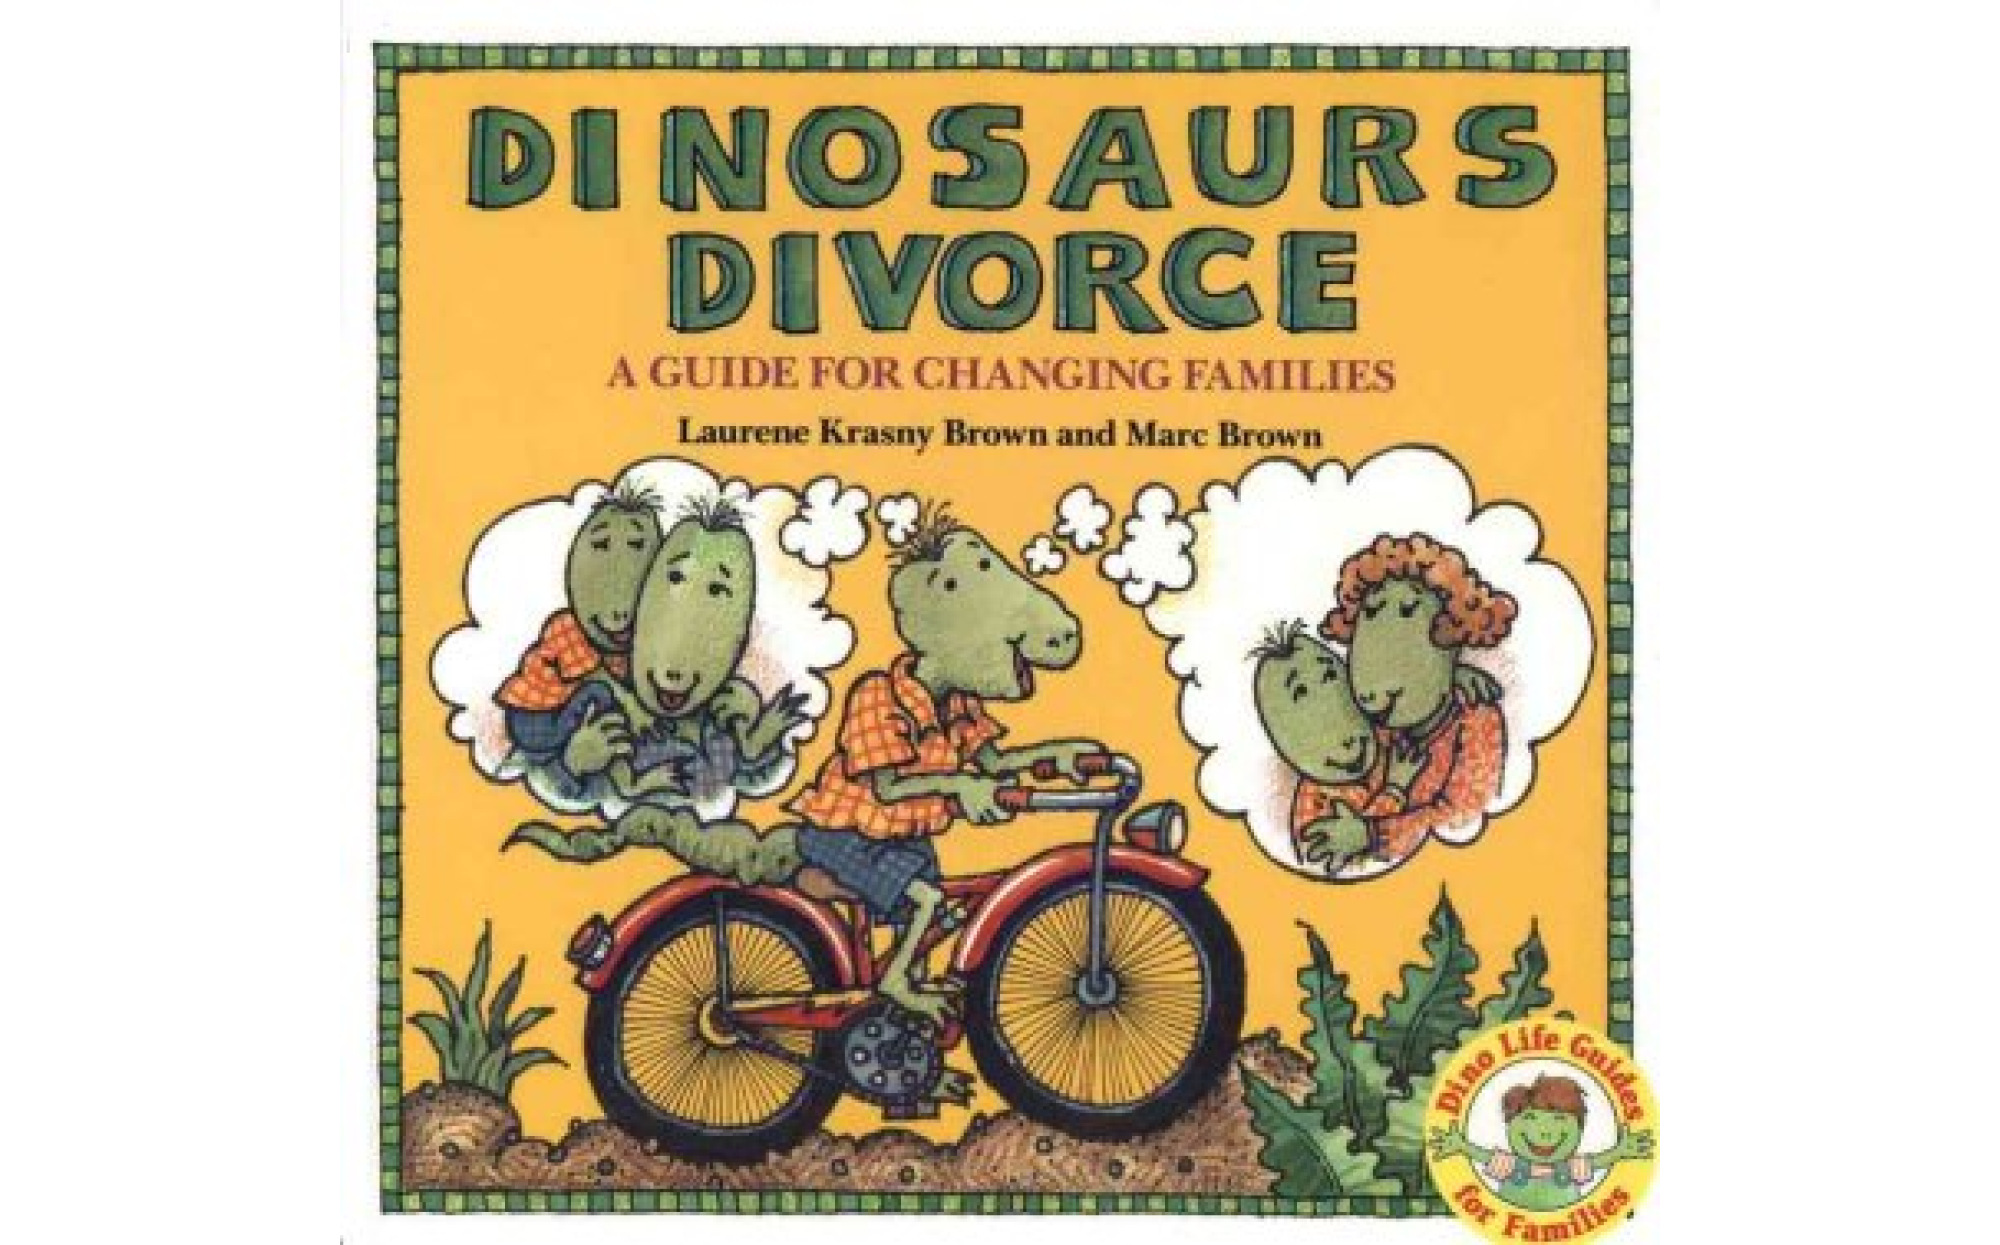 Dinosaur Game Kids Love - The OT Toolbox  Dinosaur activities preschool, Dinosaur  games, Dinosaur activities